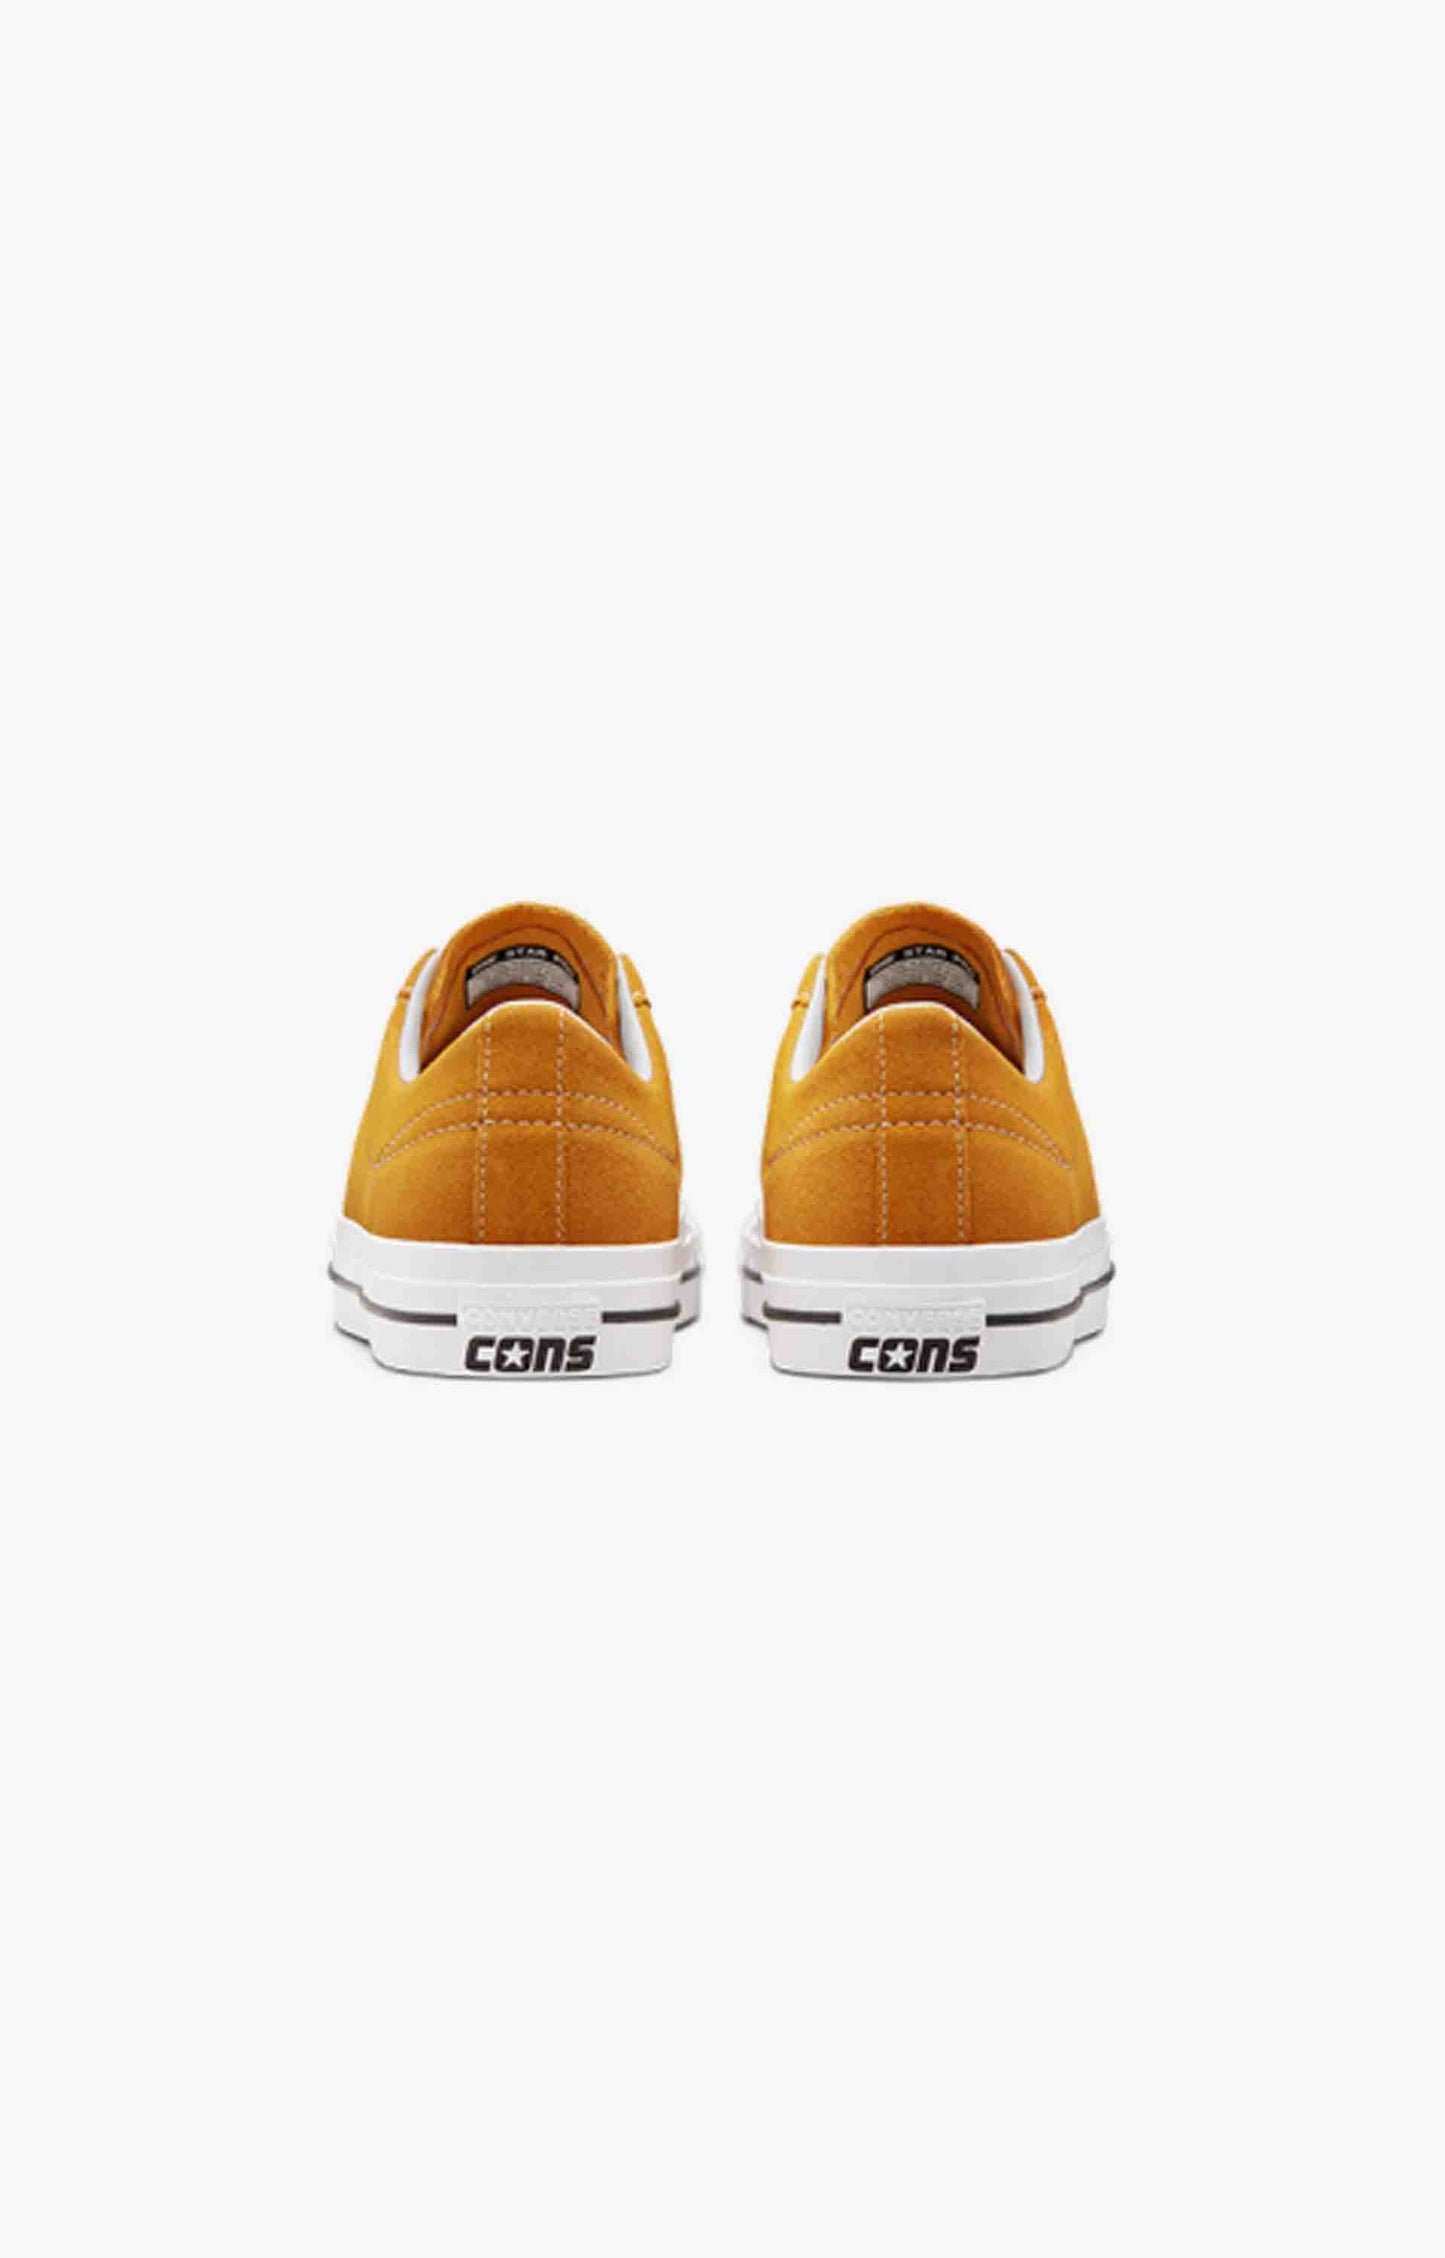 Converse One Star Pro Suede Low Mens Shoe, Golden Sundail